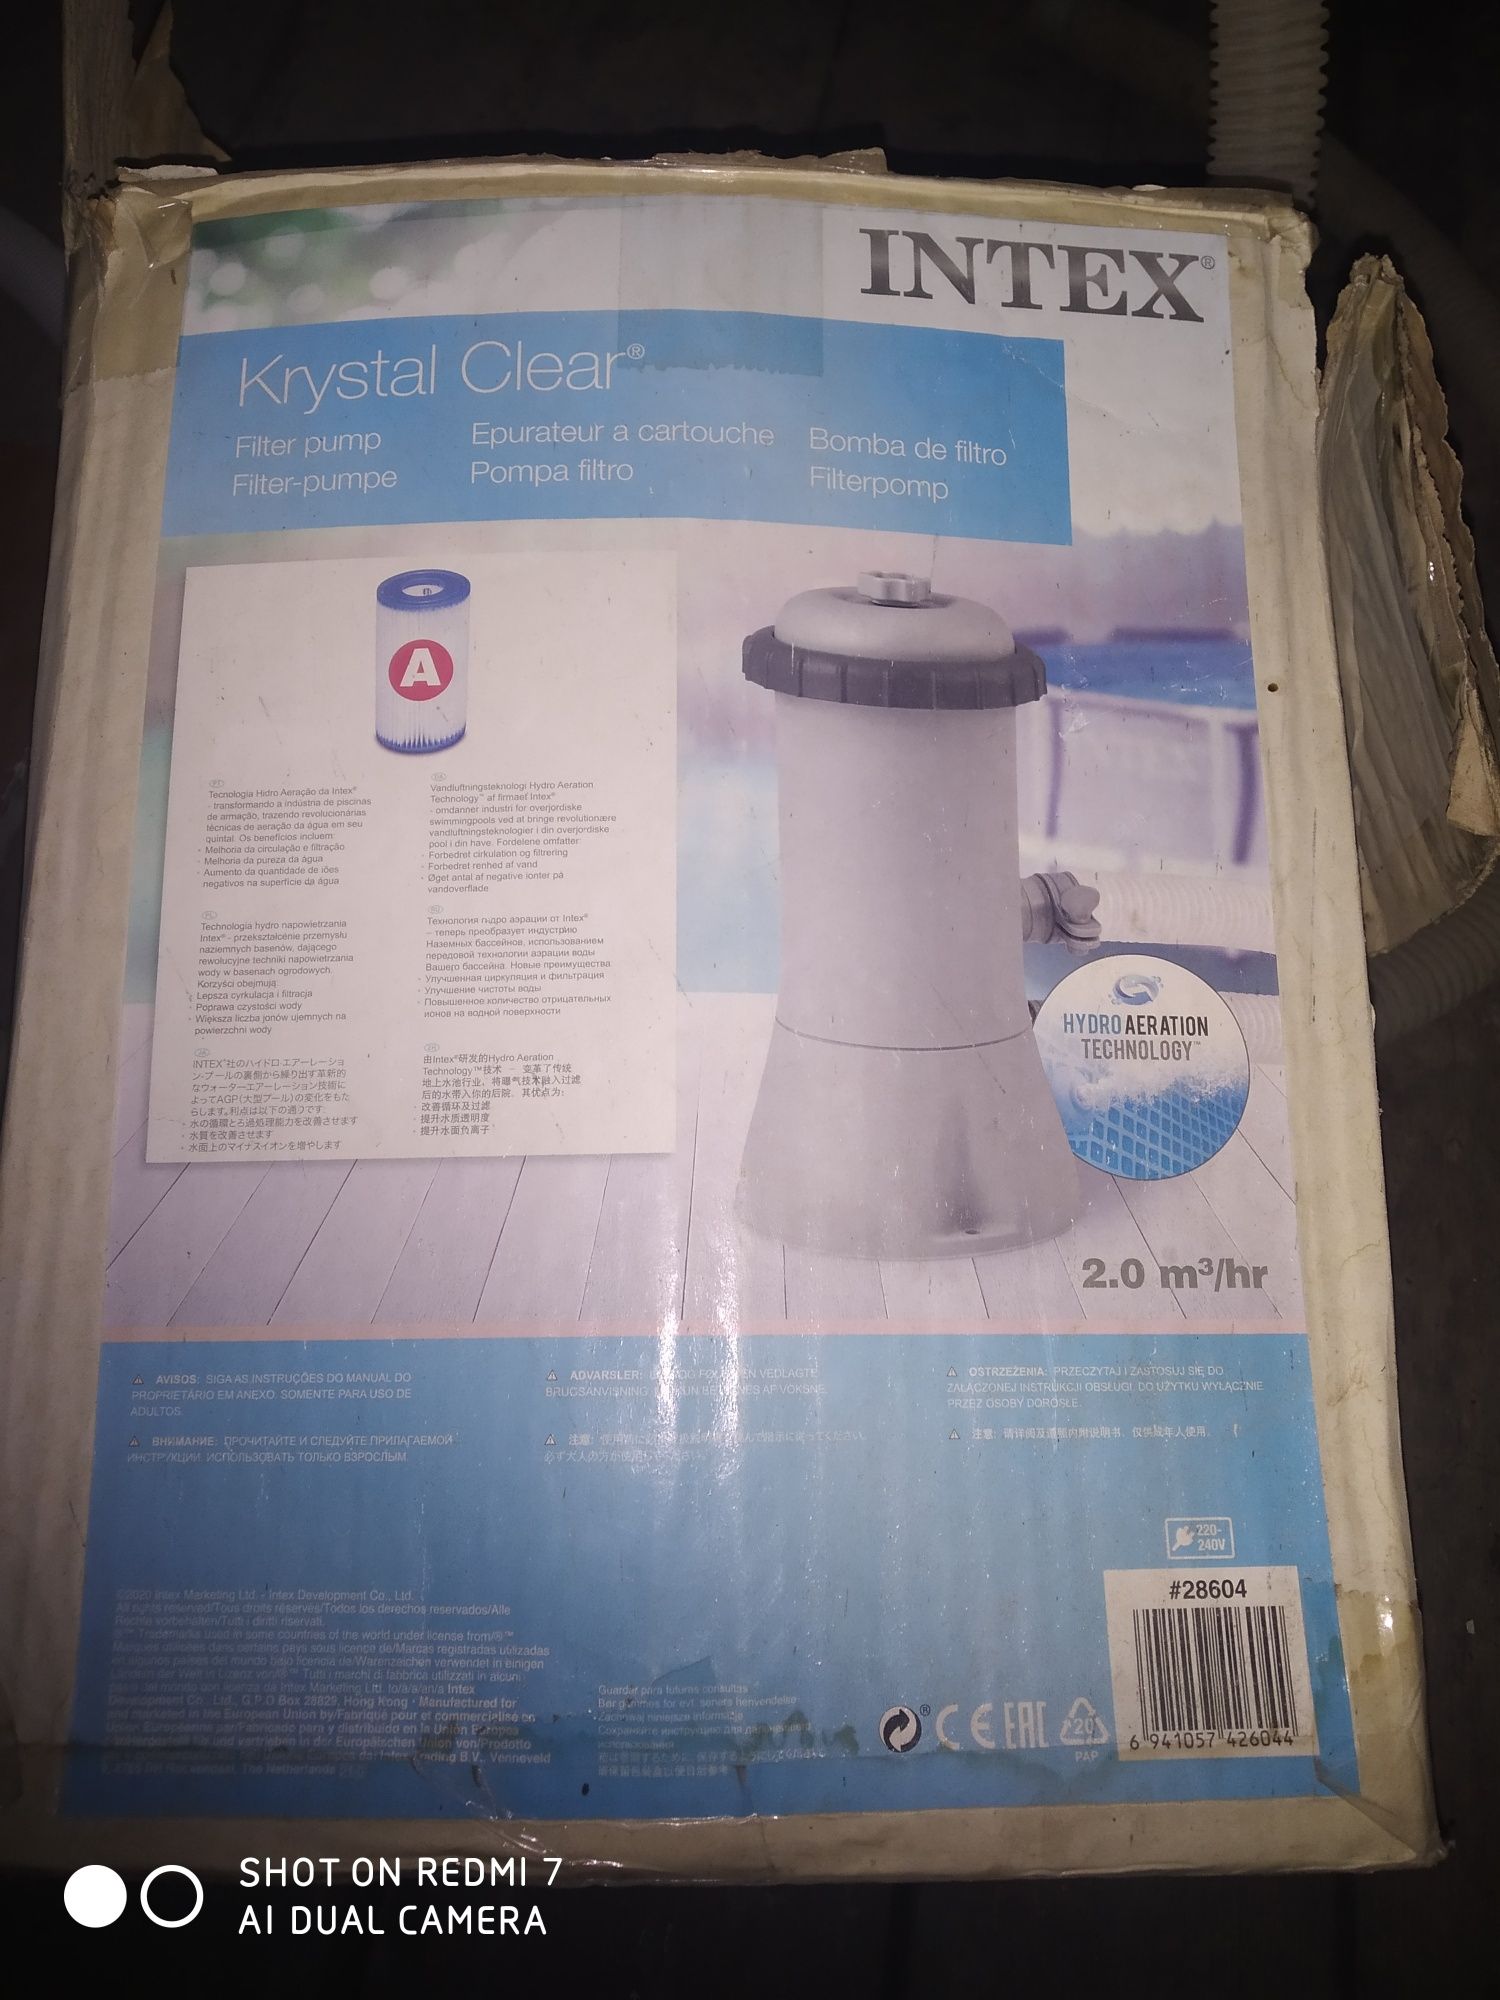 INTEX Krystal Clear